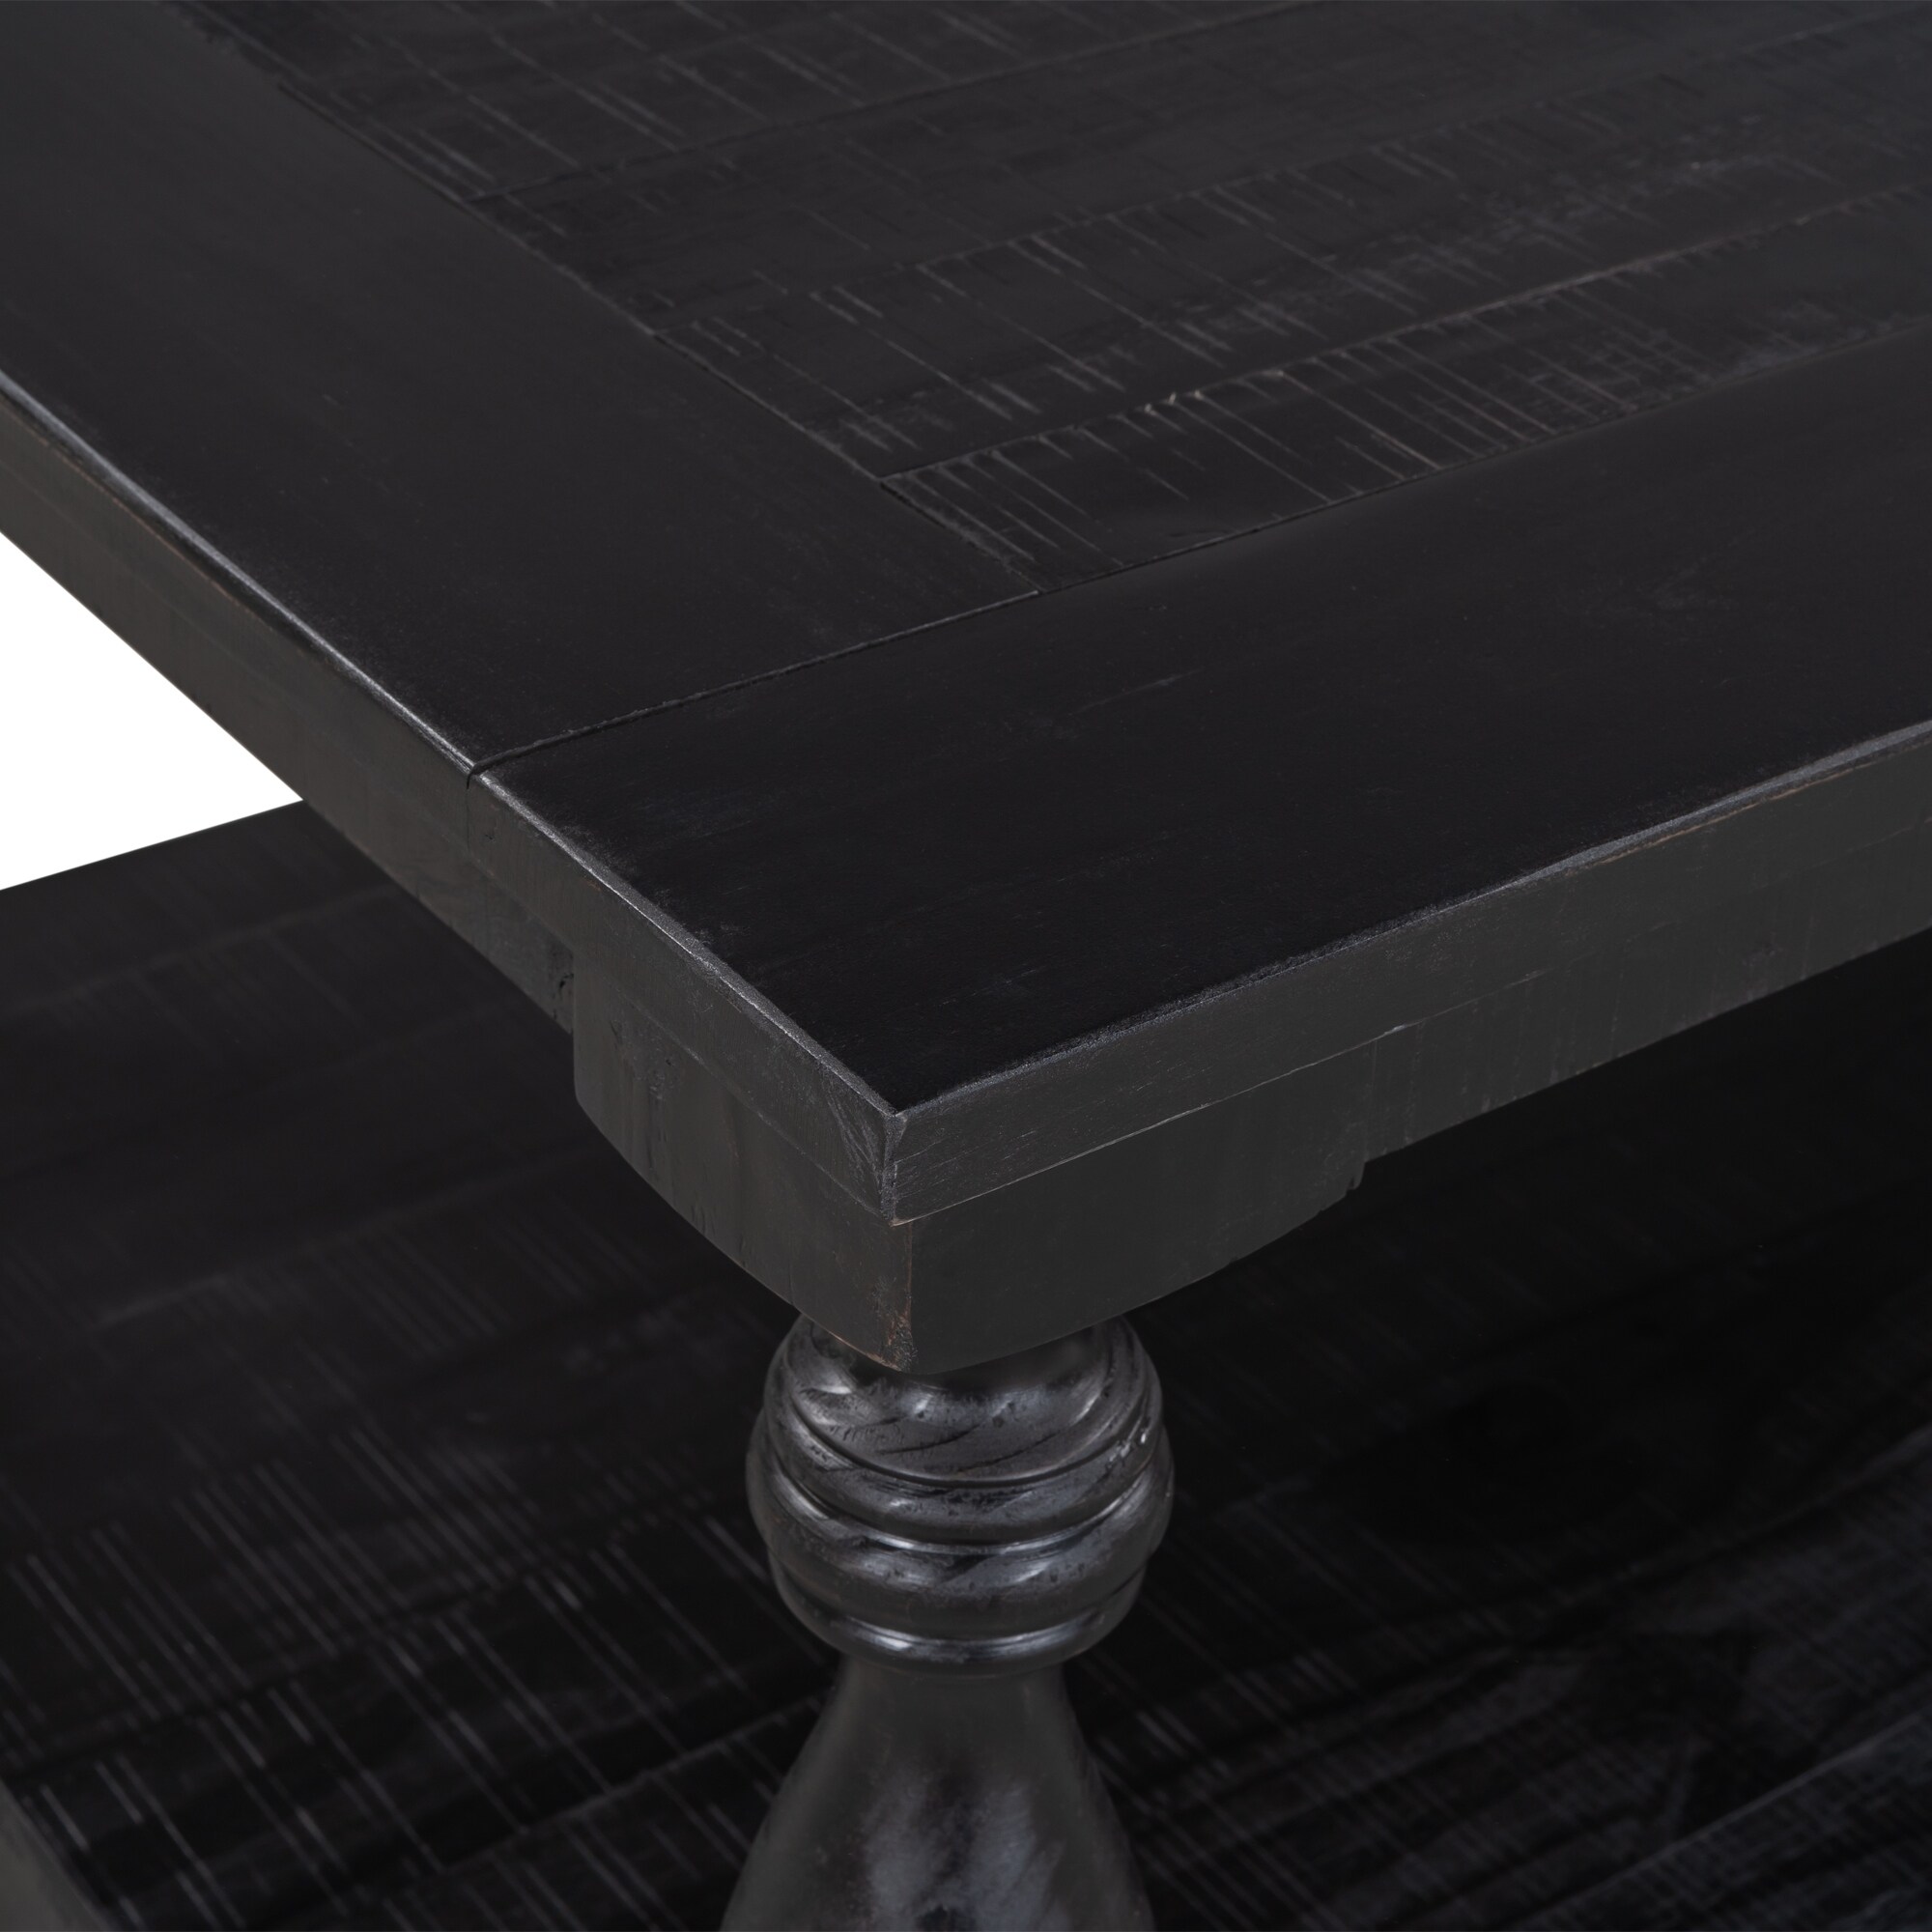 Rustic Floor Shelf Coffee Table with Storage